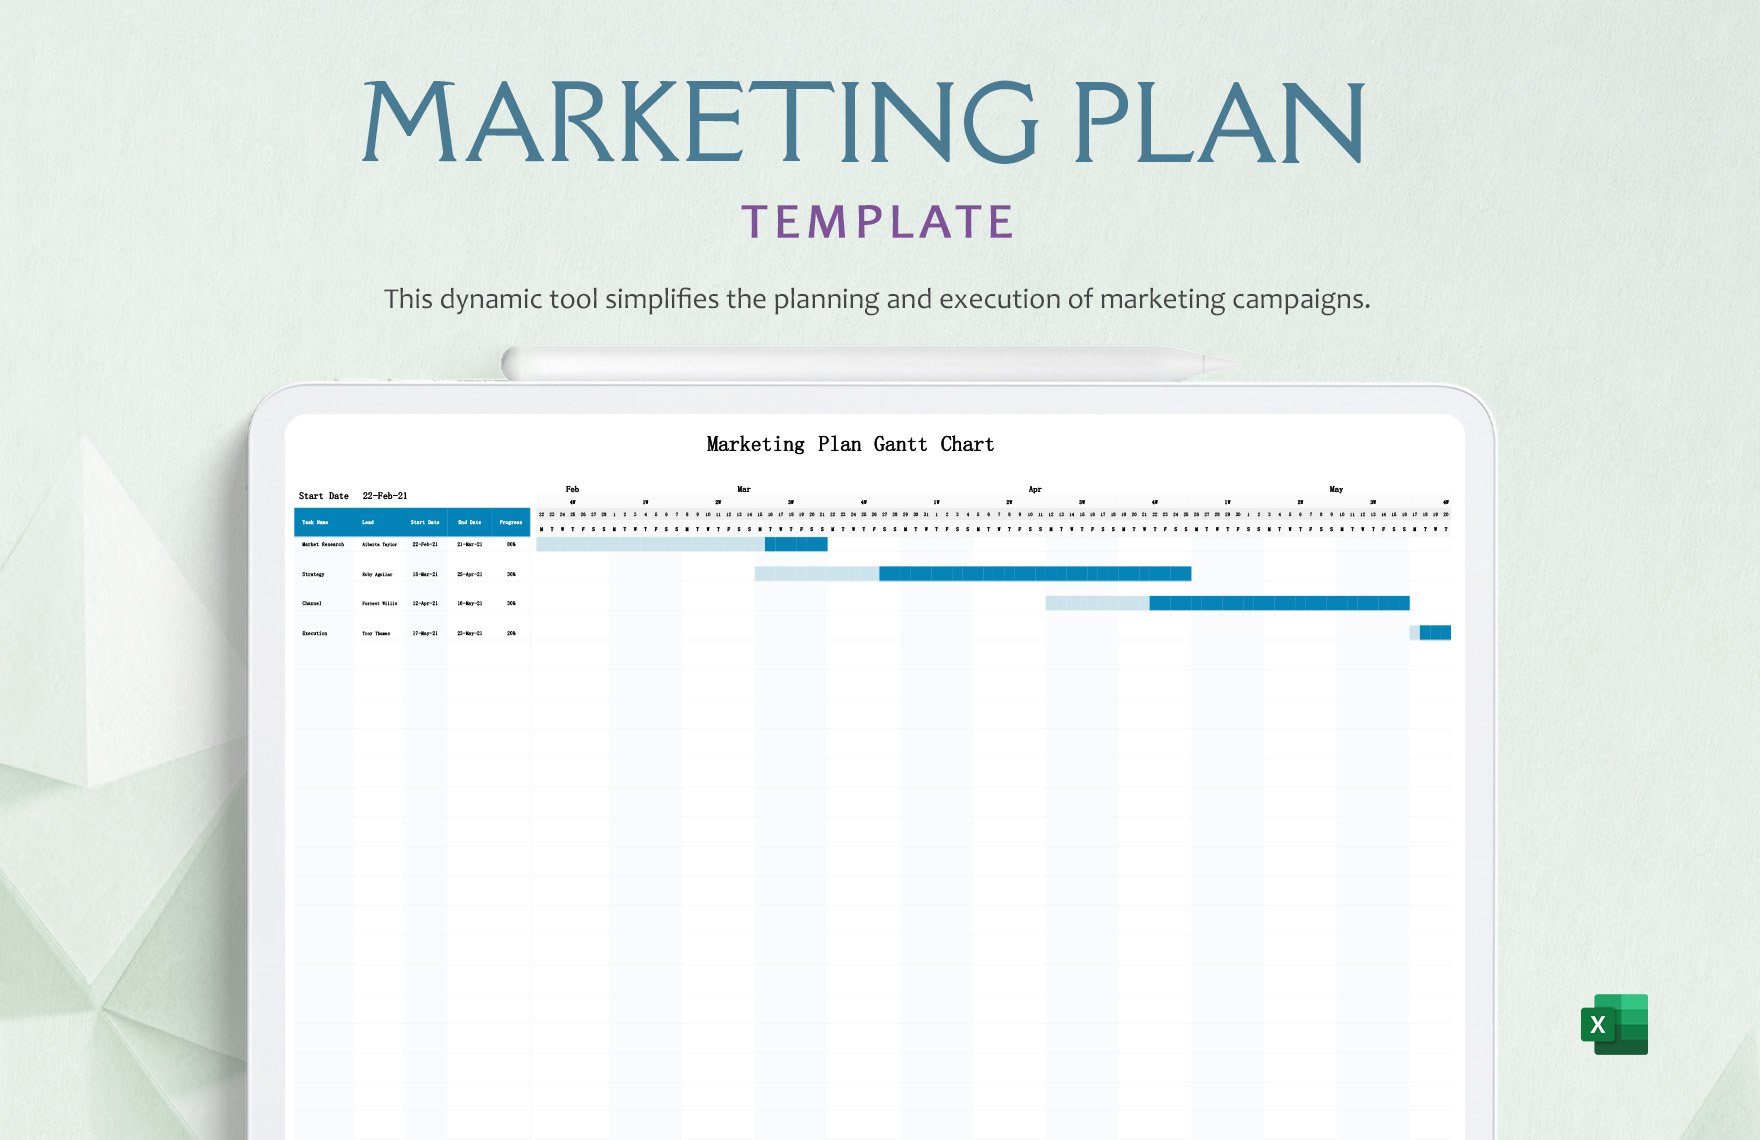 Marketing Plan Gantt Chart Template in Excel